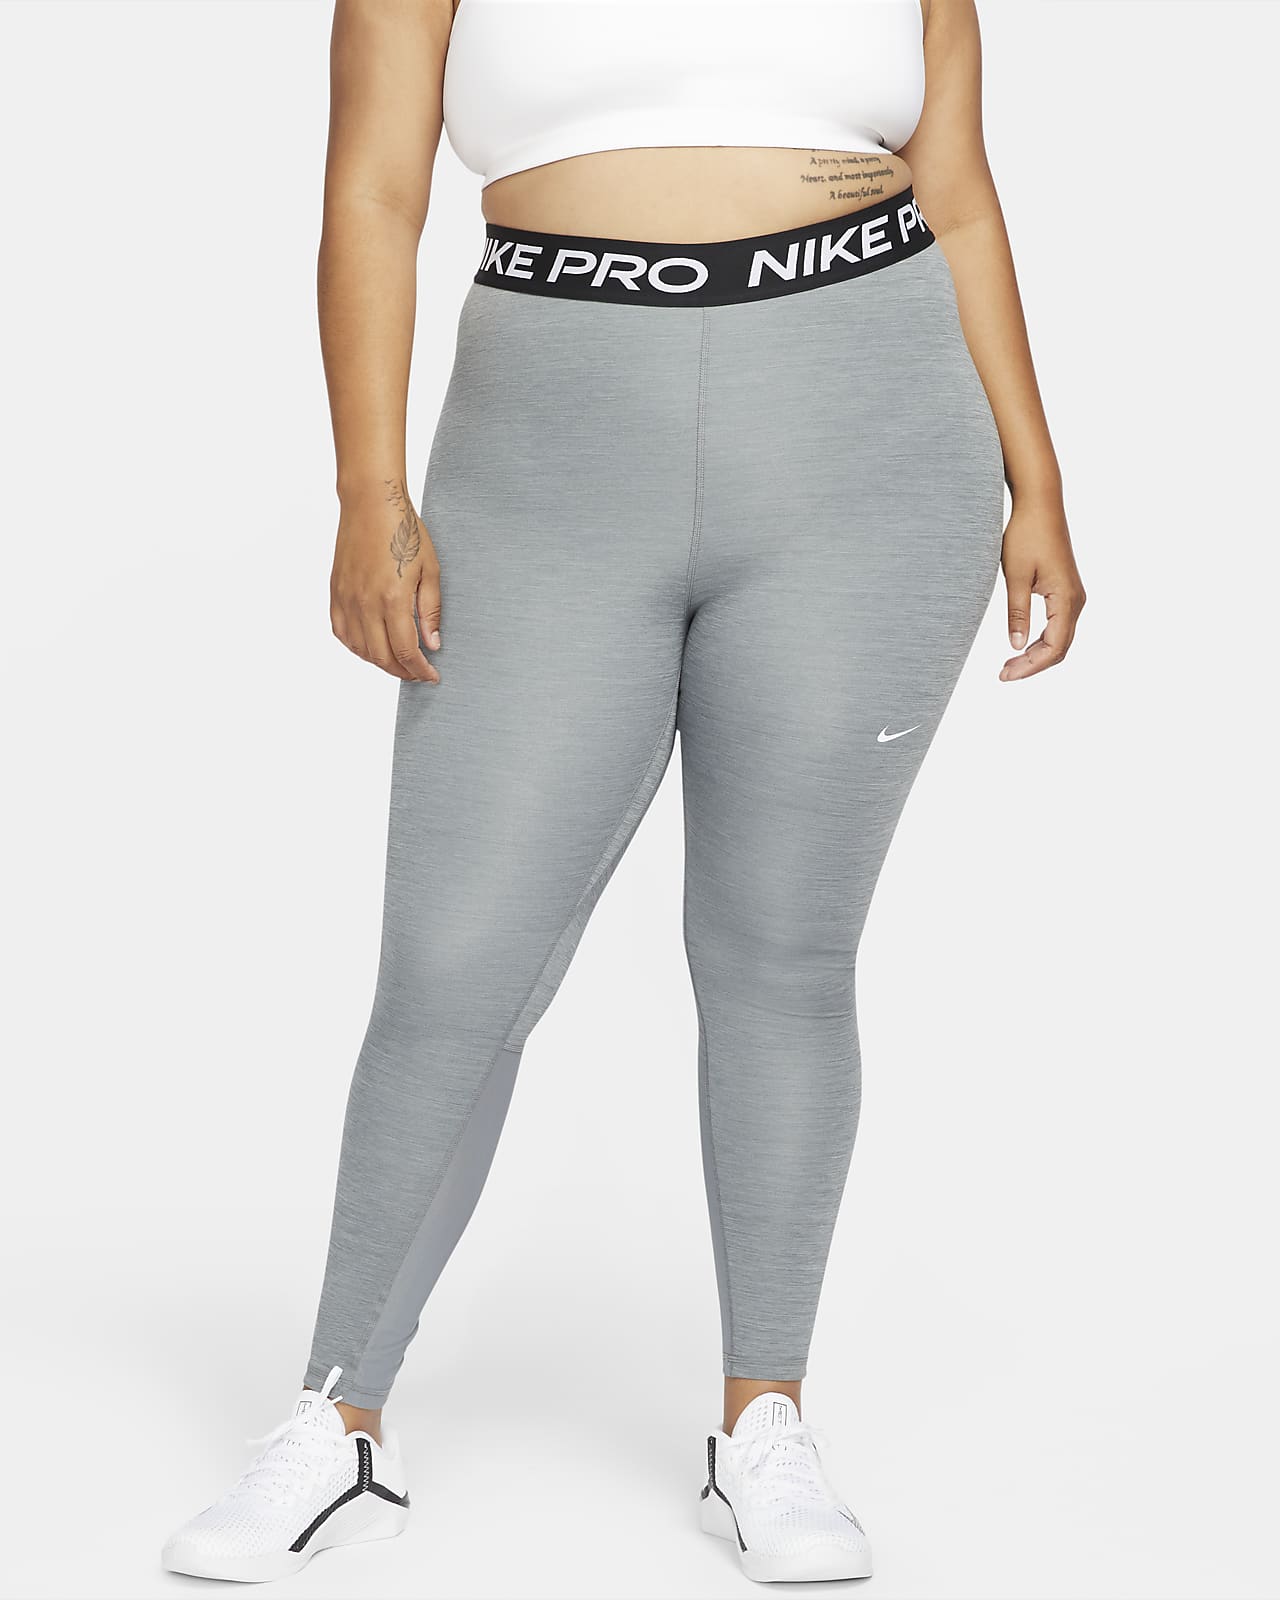 nike pro women's tights grey